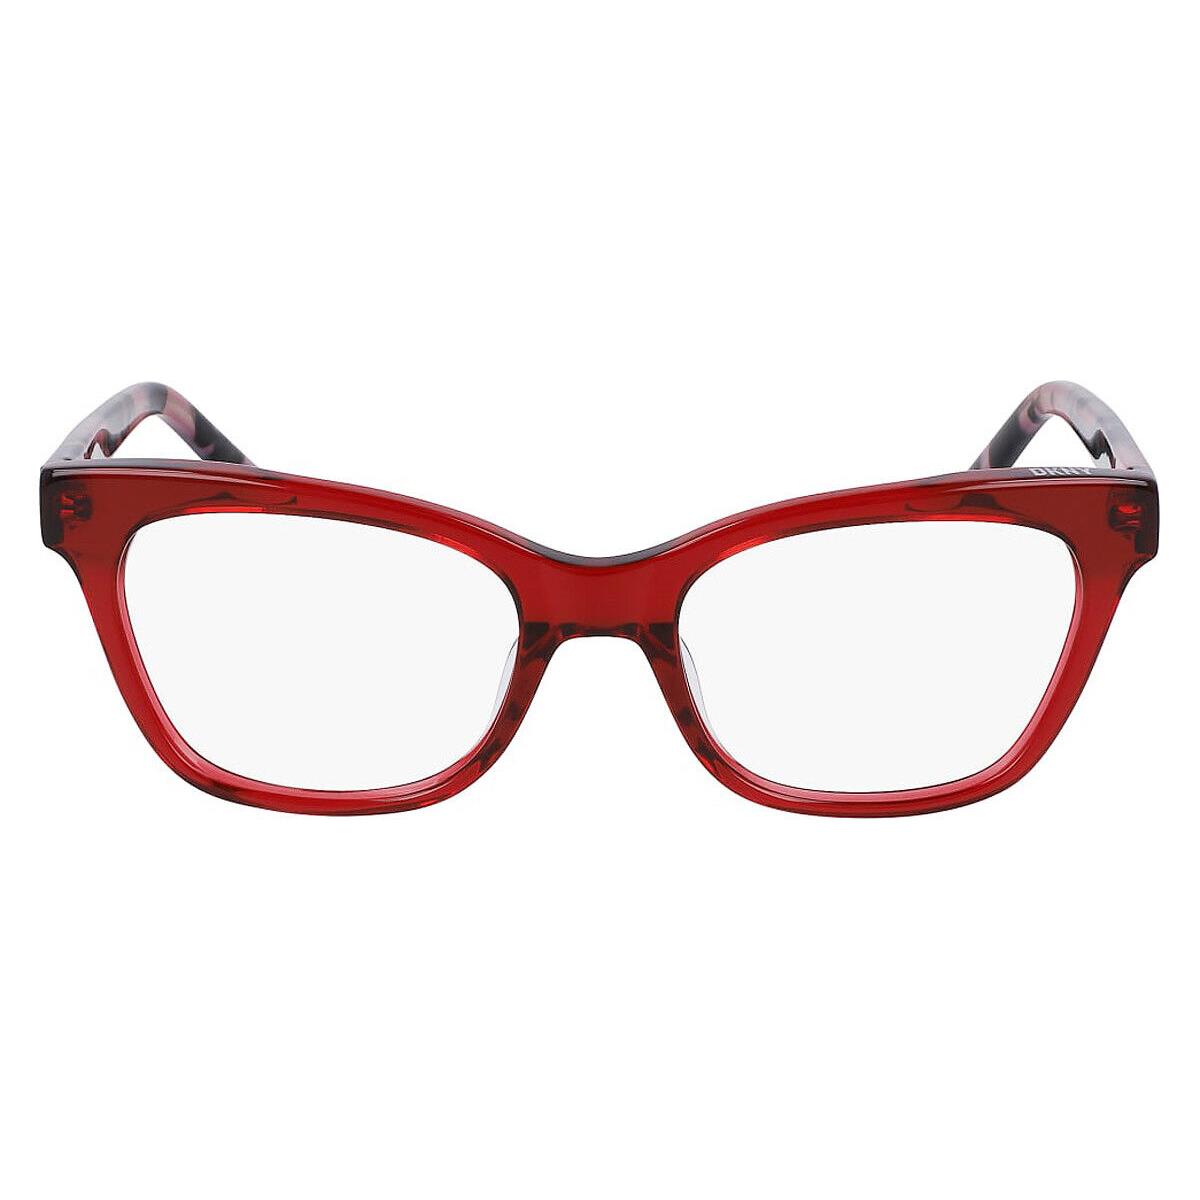 Dkny DK5053 Eyeglasses Women Crystal Red Cat Eye 51mm - Frame: Crystal Red, Lens: Demo